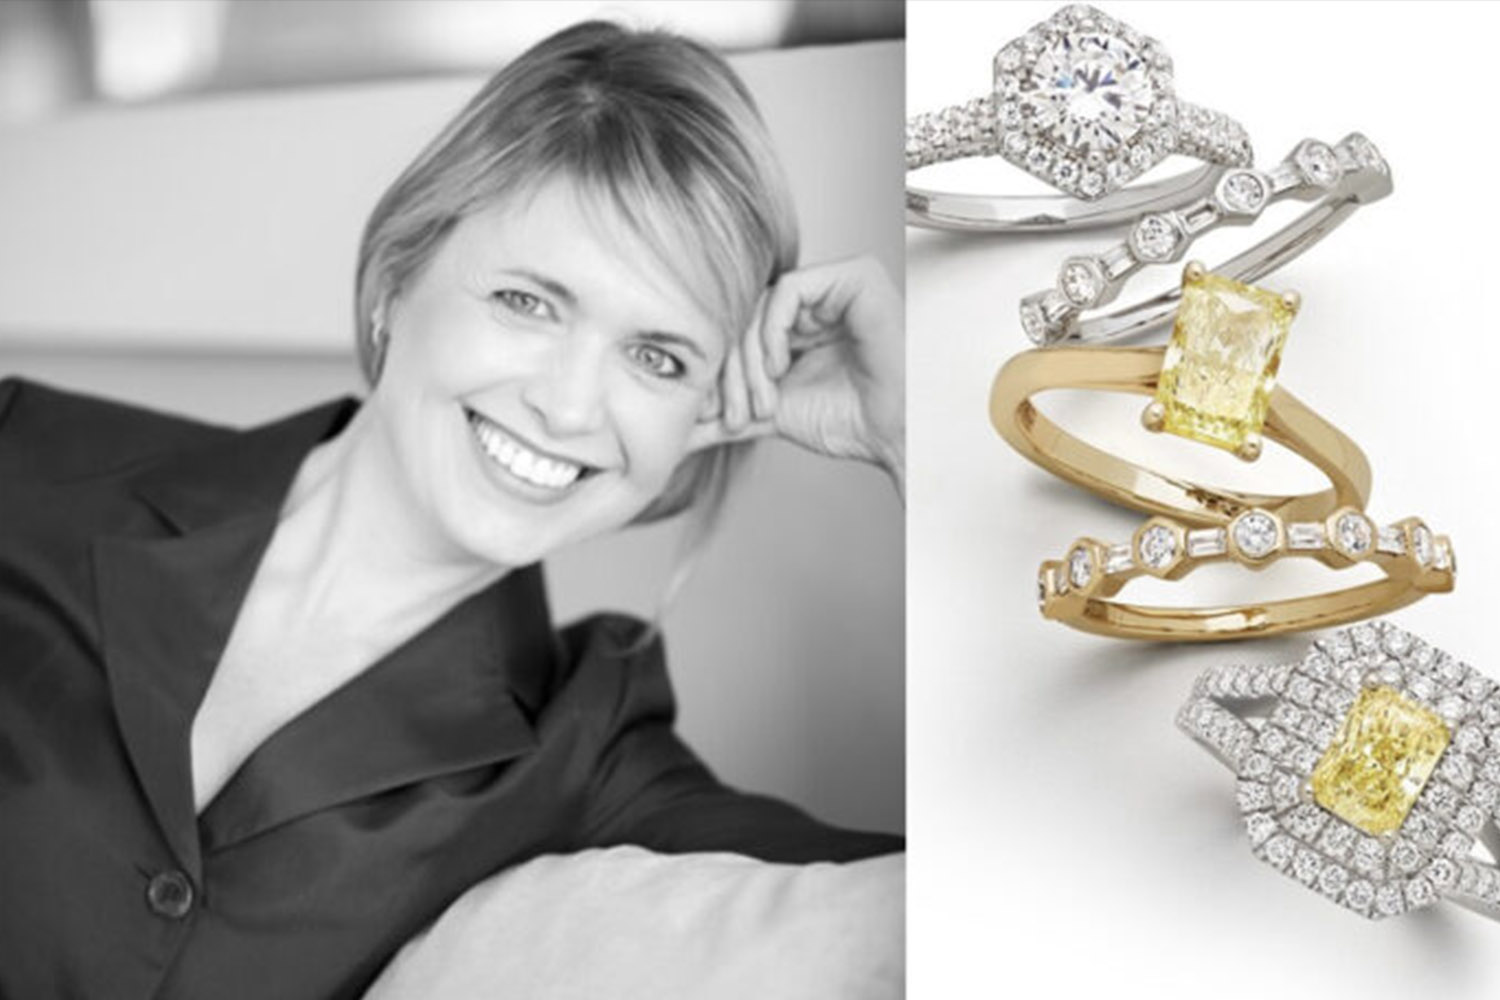 Jenny Packham and Helzberg Diamonds design honeybee-inspired bridal jewelry.